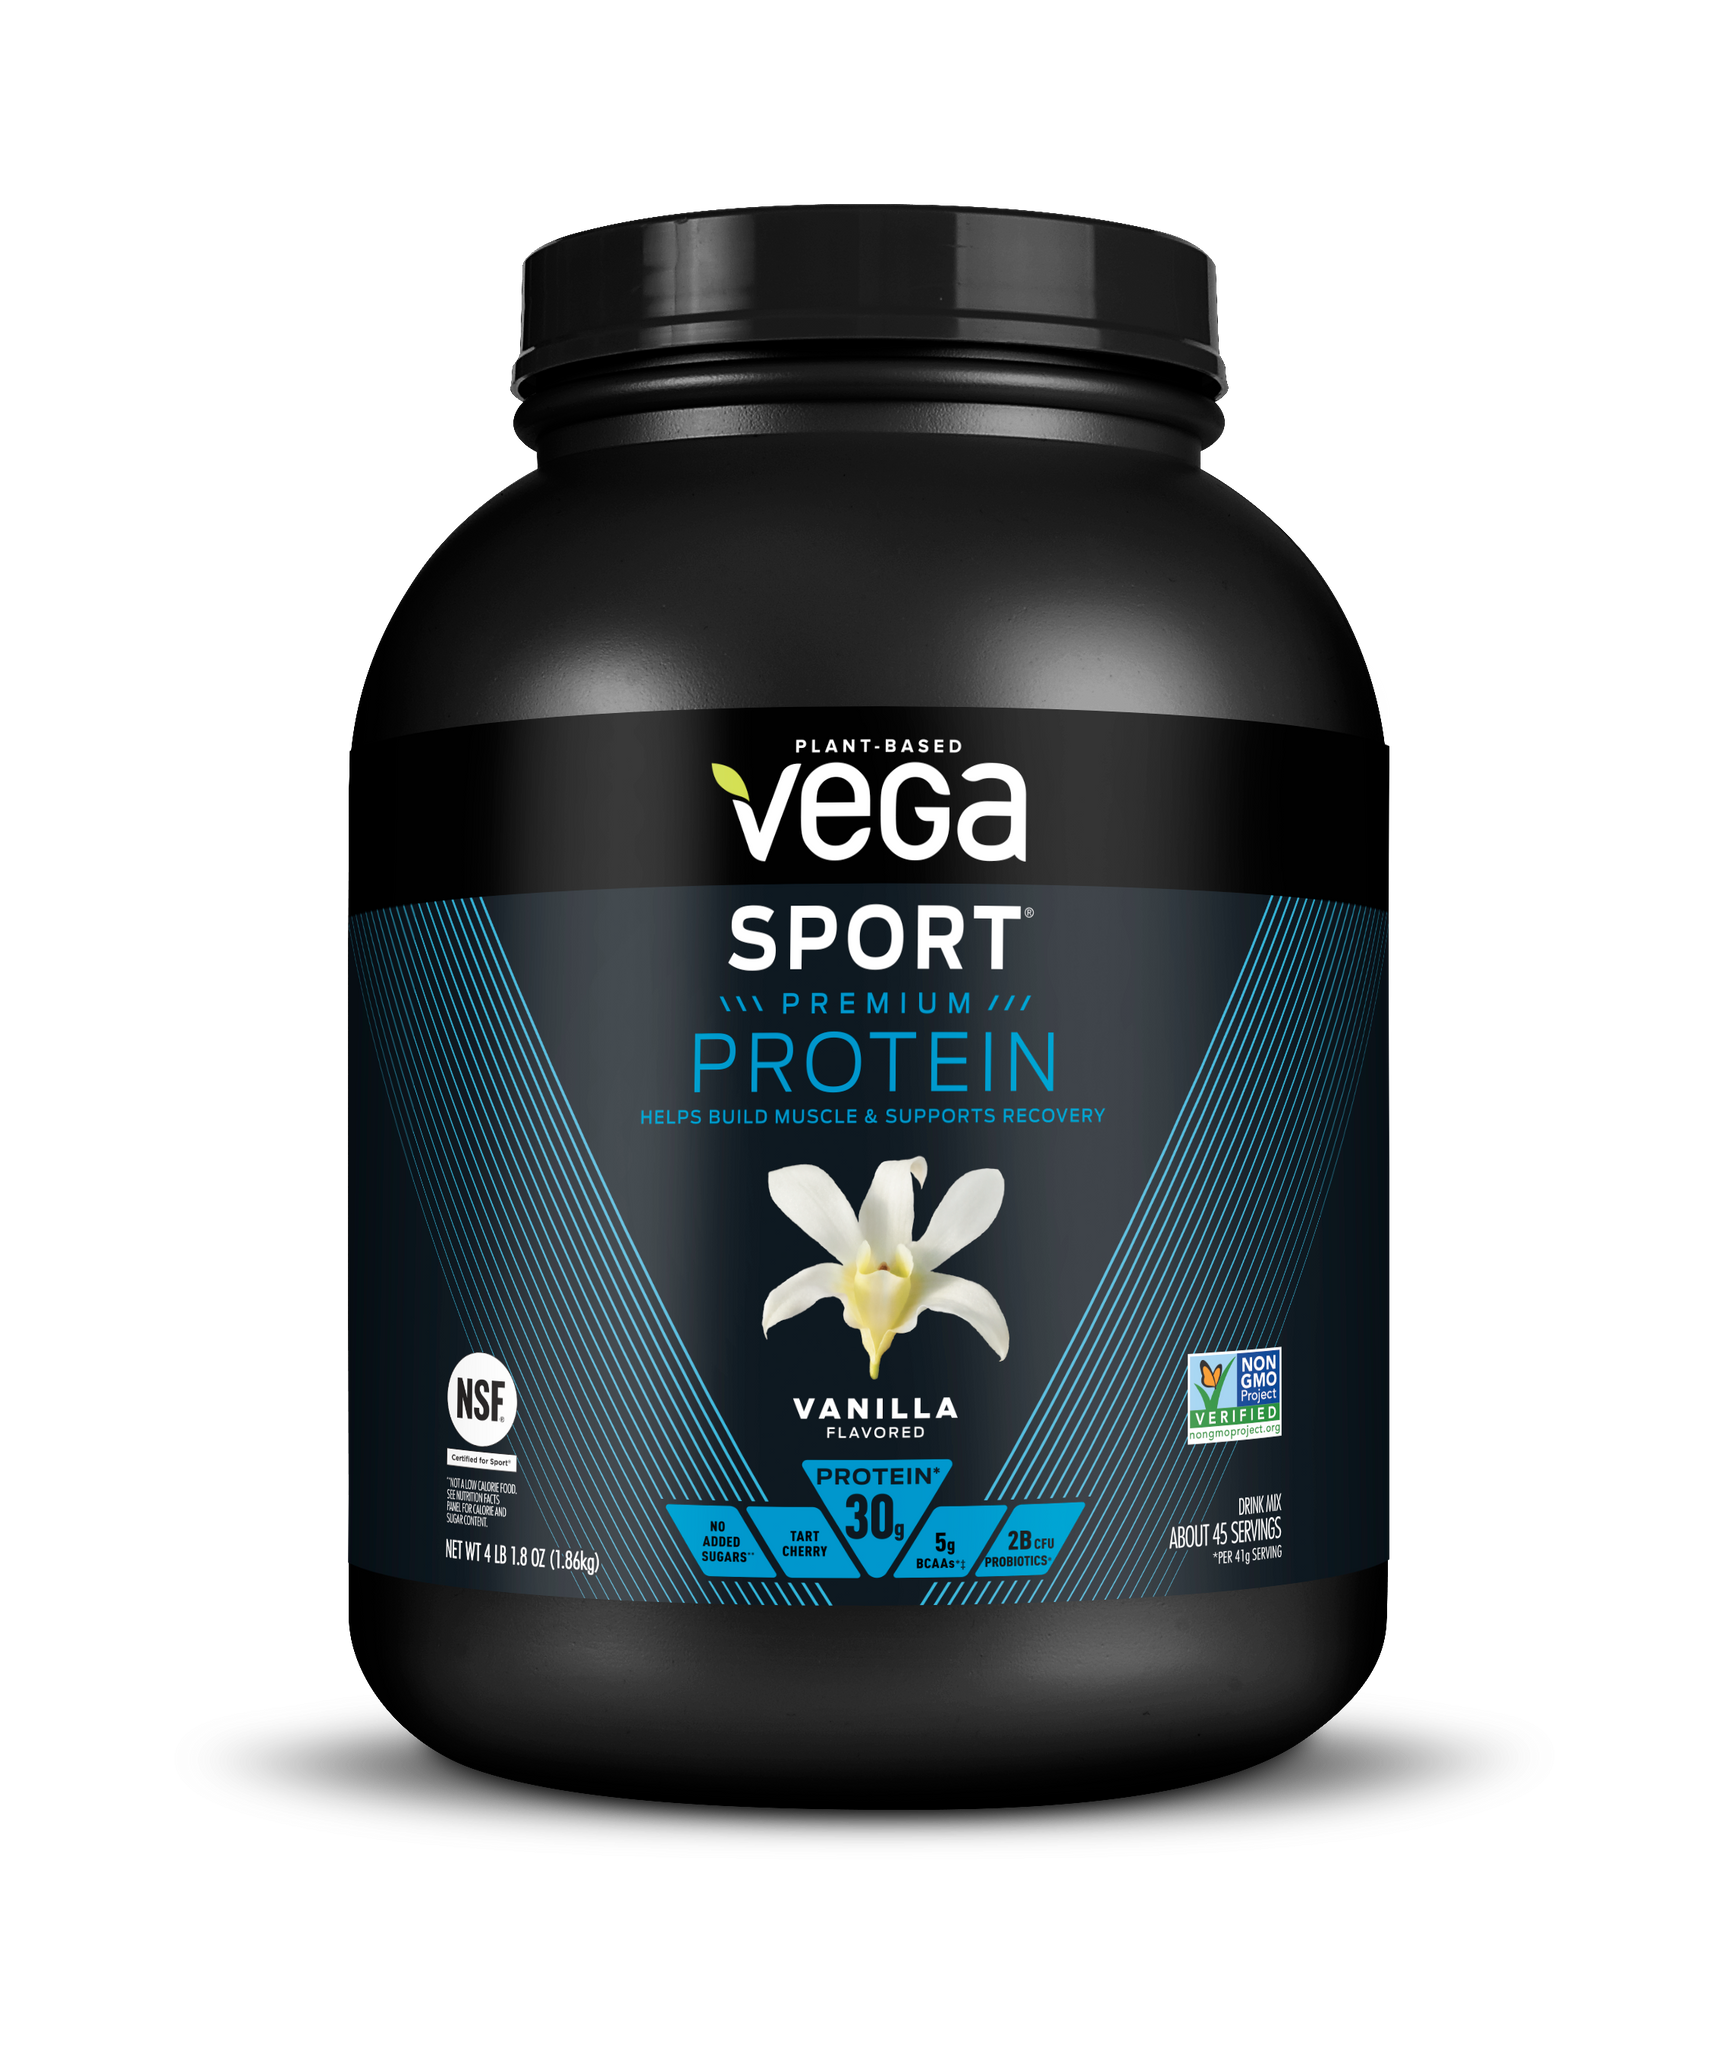 Vega Sport® Premium - Plant-Based Protein Powder